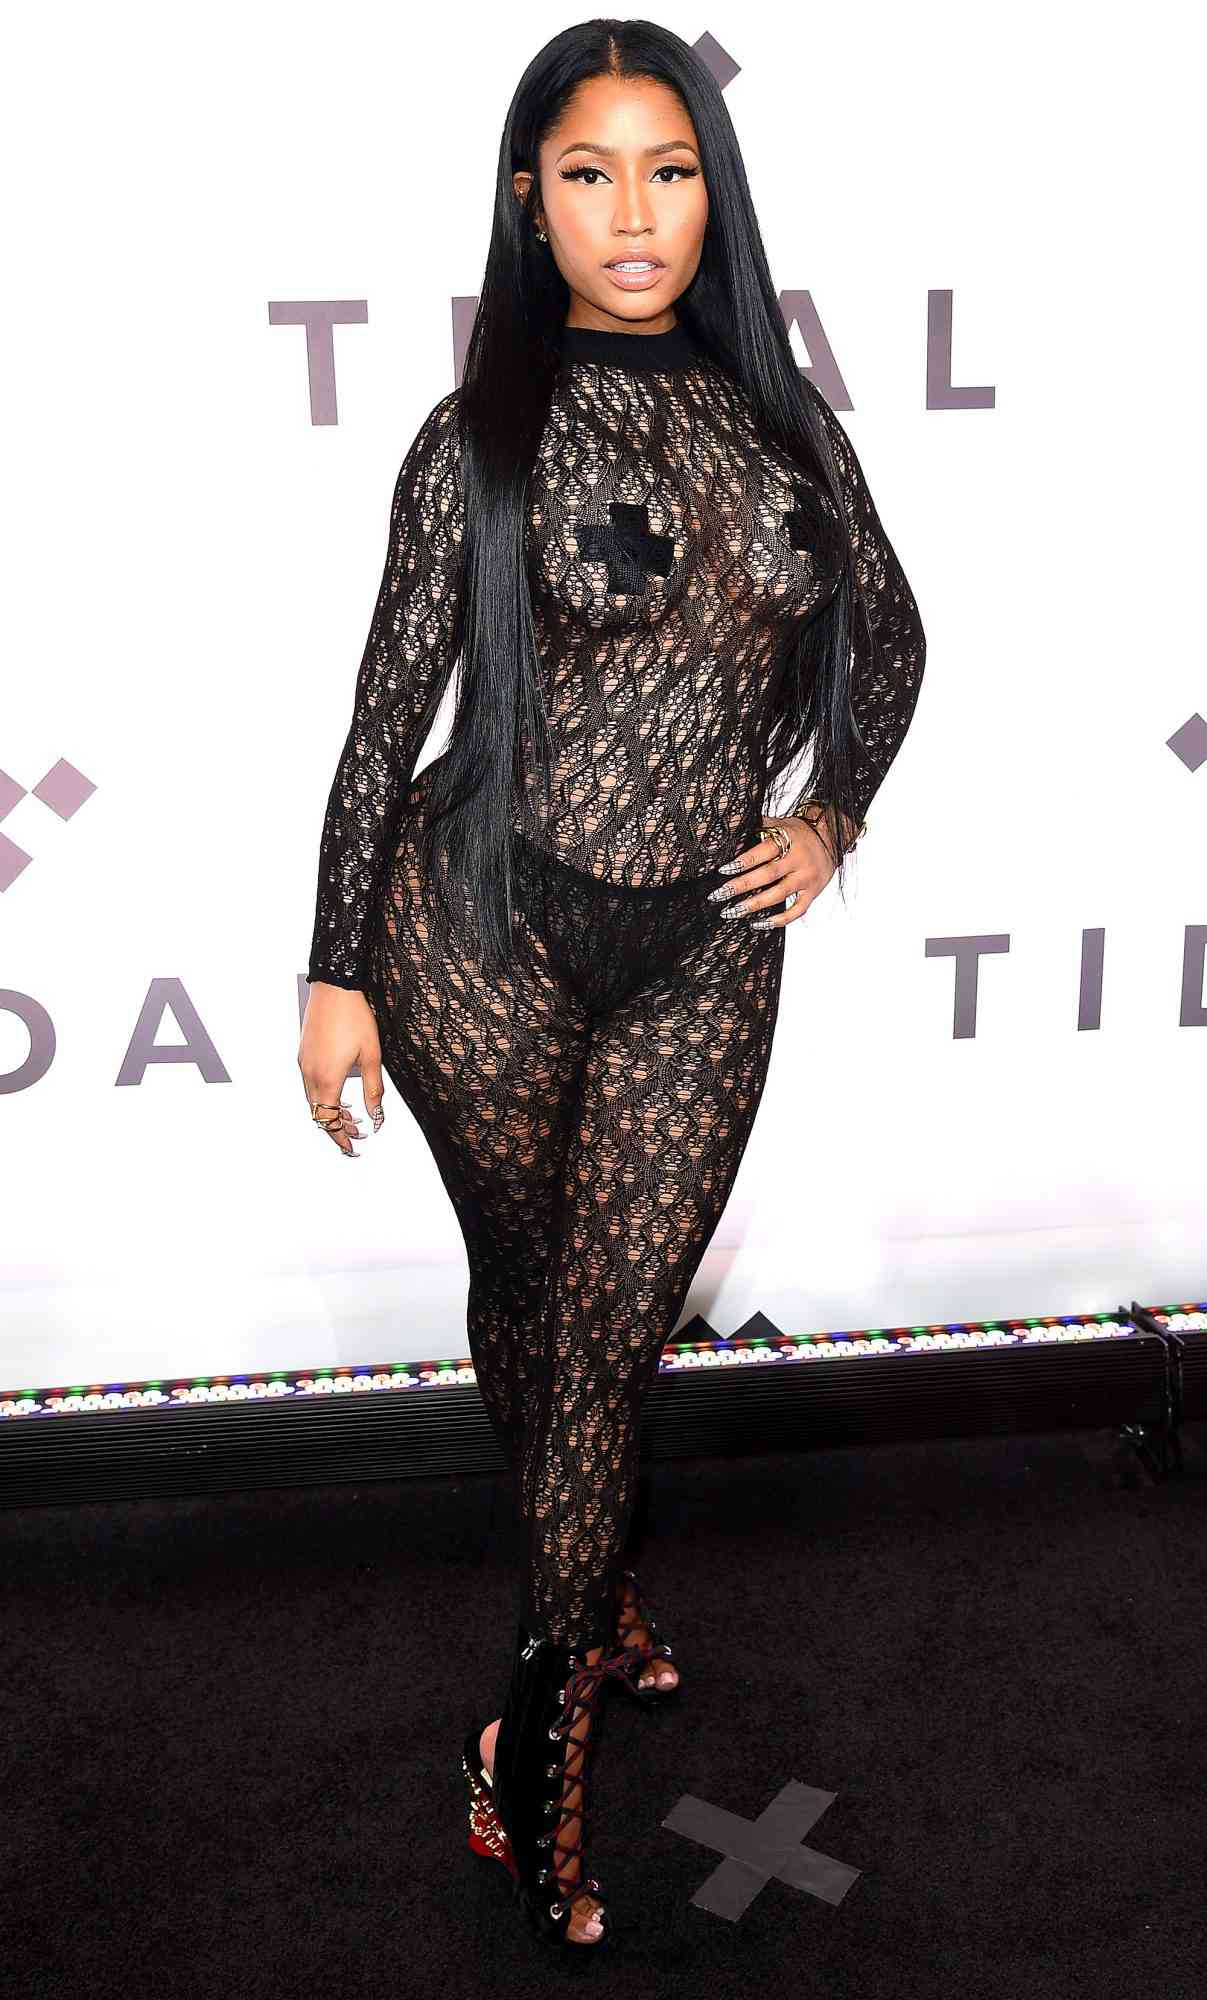 asad ali sultan recommends Nicki Minaj Shows Off Her Boobs